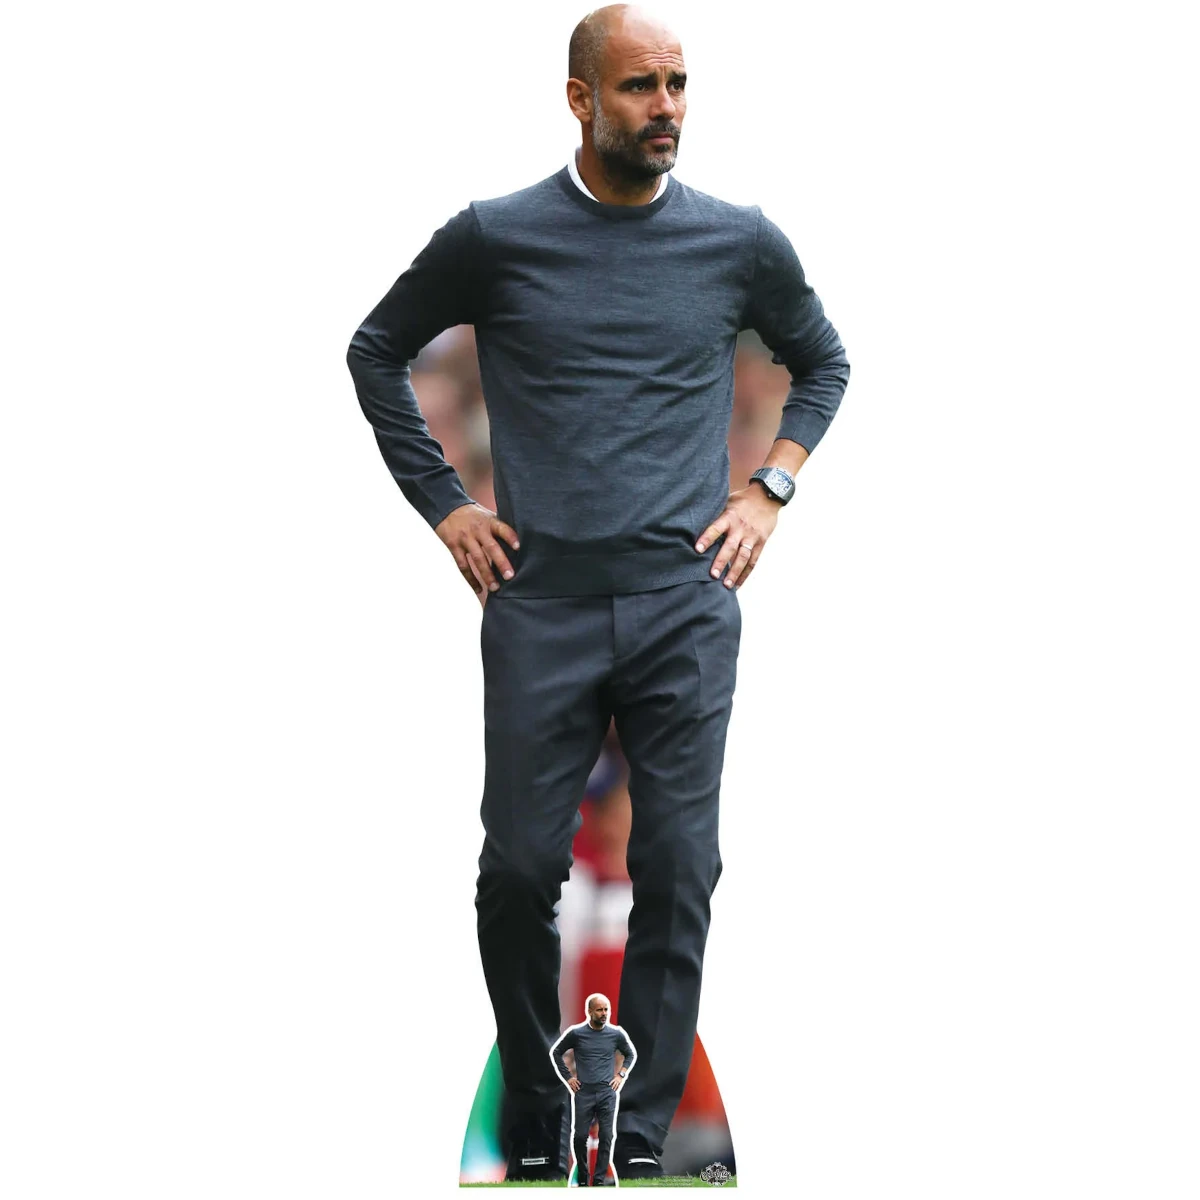 CS792 Pep Guardiola (Spanish Football Manager) Lifesize + Mini Cardboard Cutout Standee Front